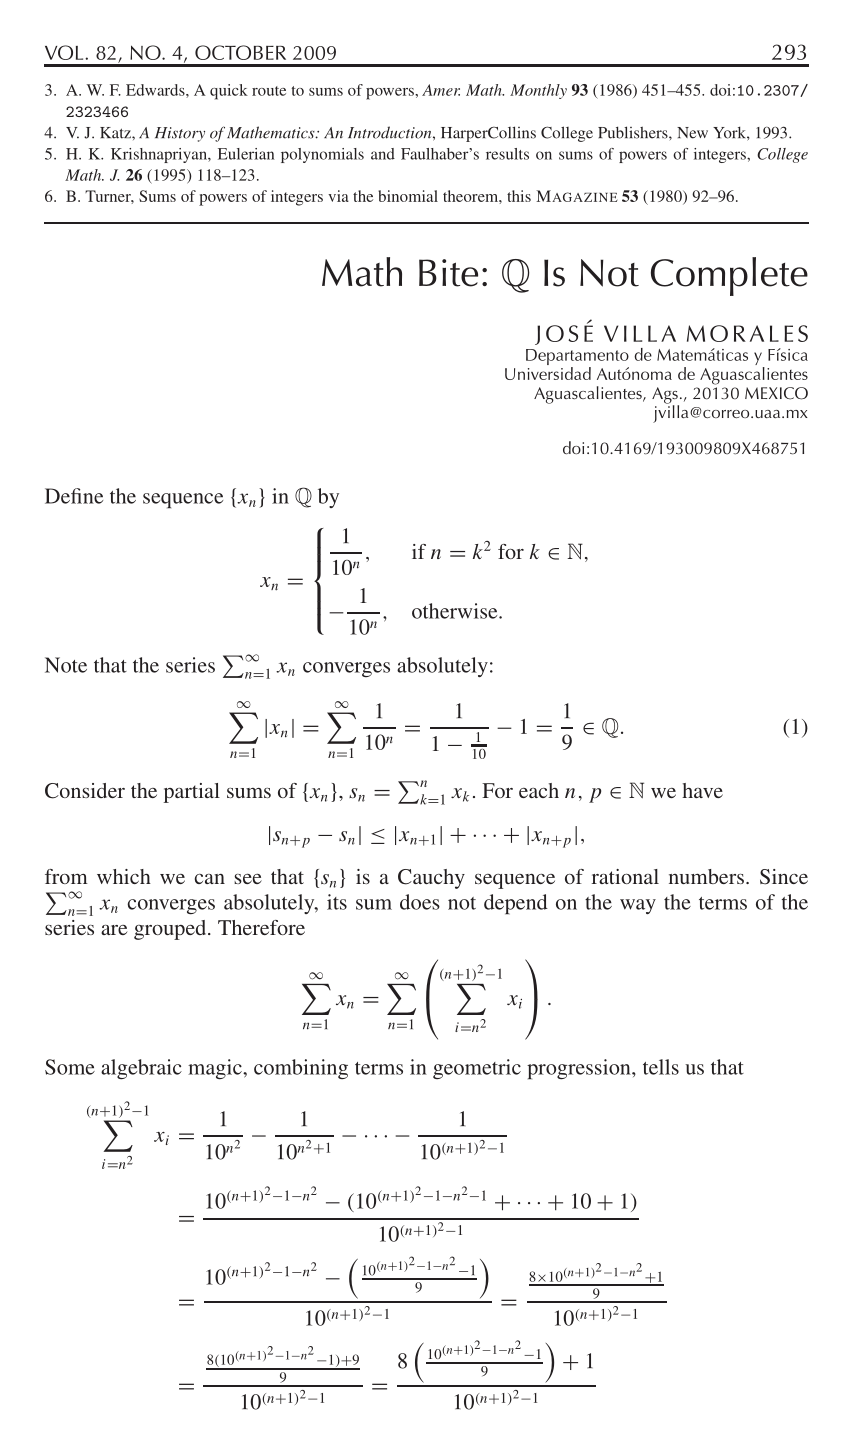 pdf-math-bite-q-is-not-complete